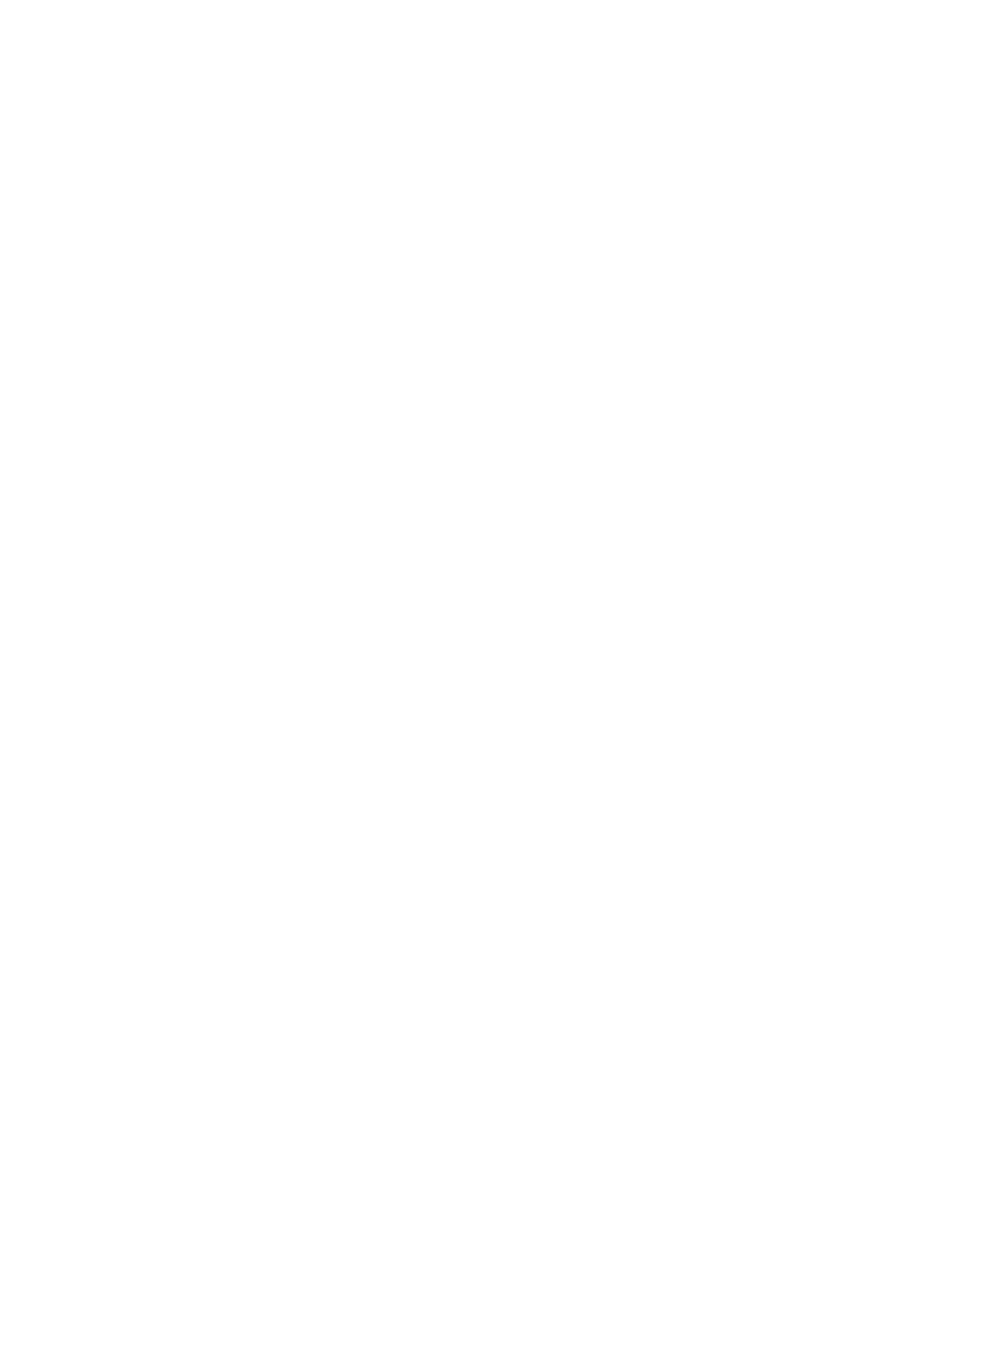 logo for Whitehorse City Council